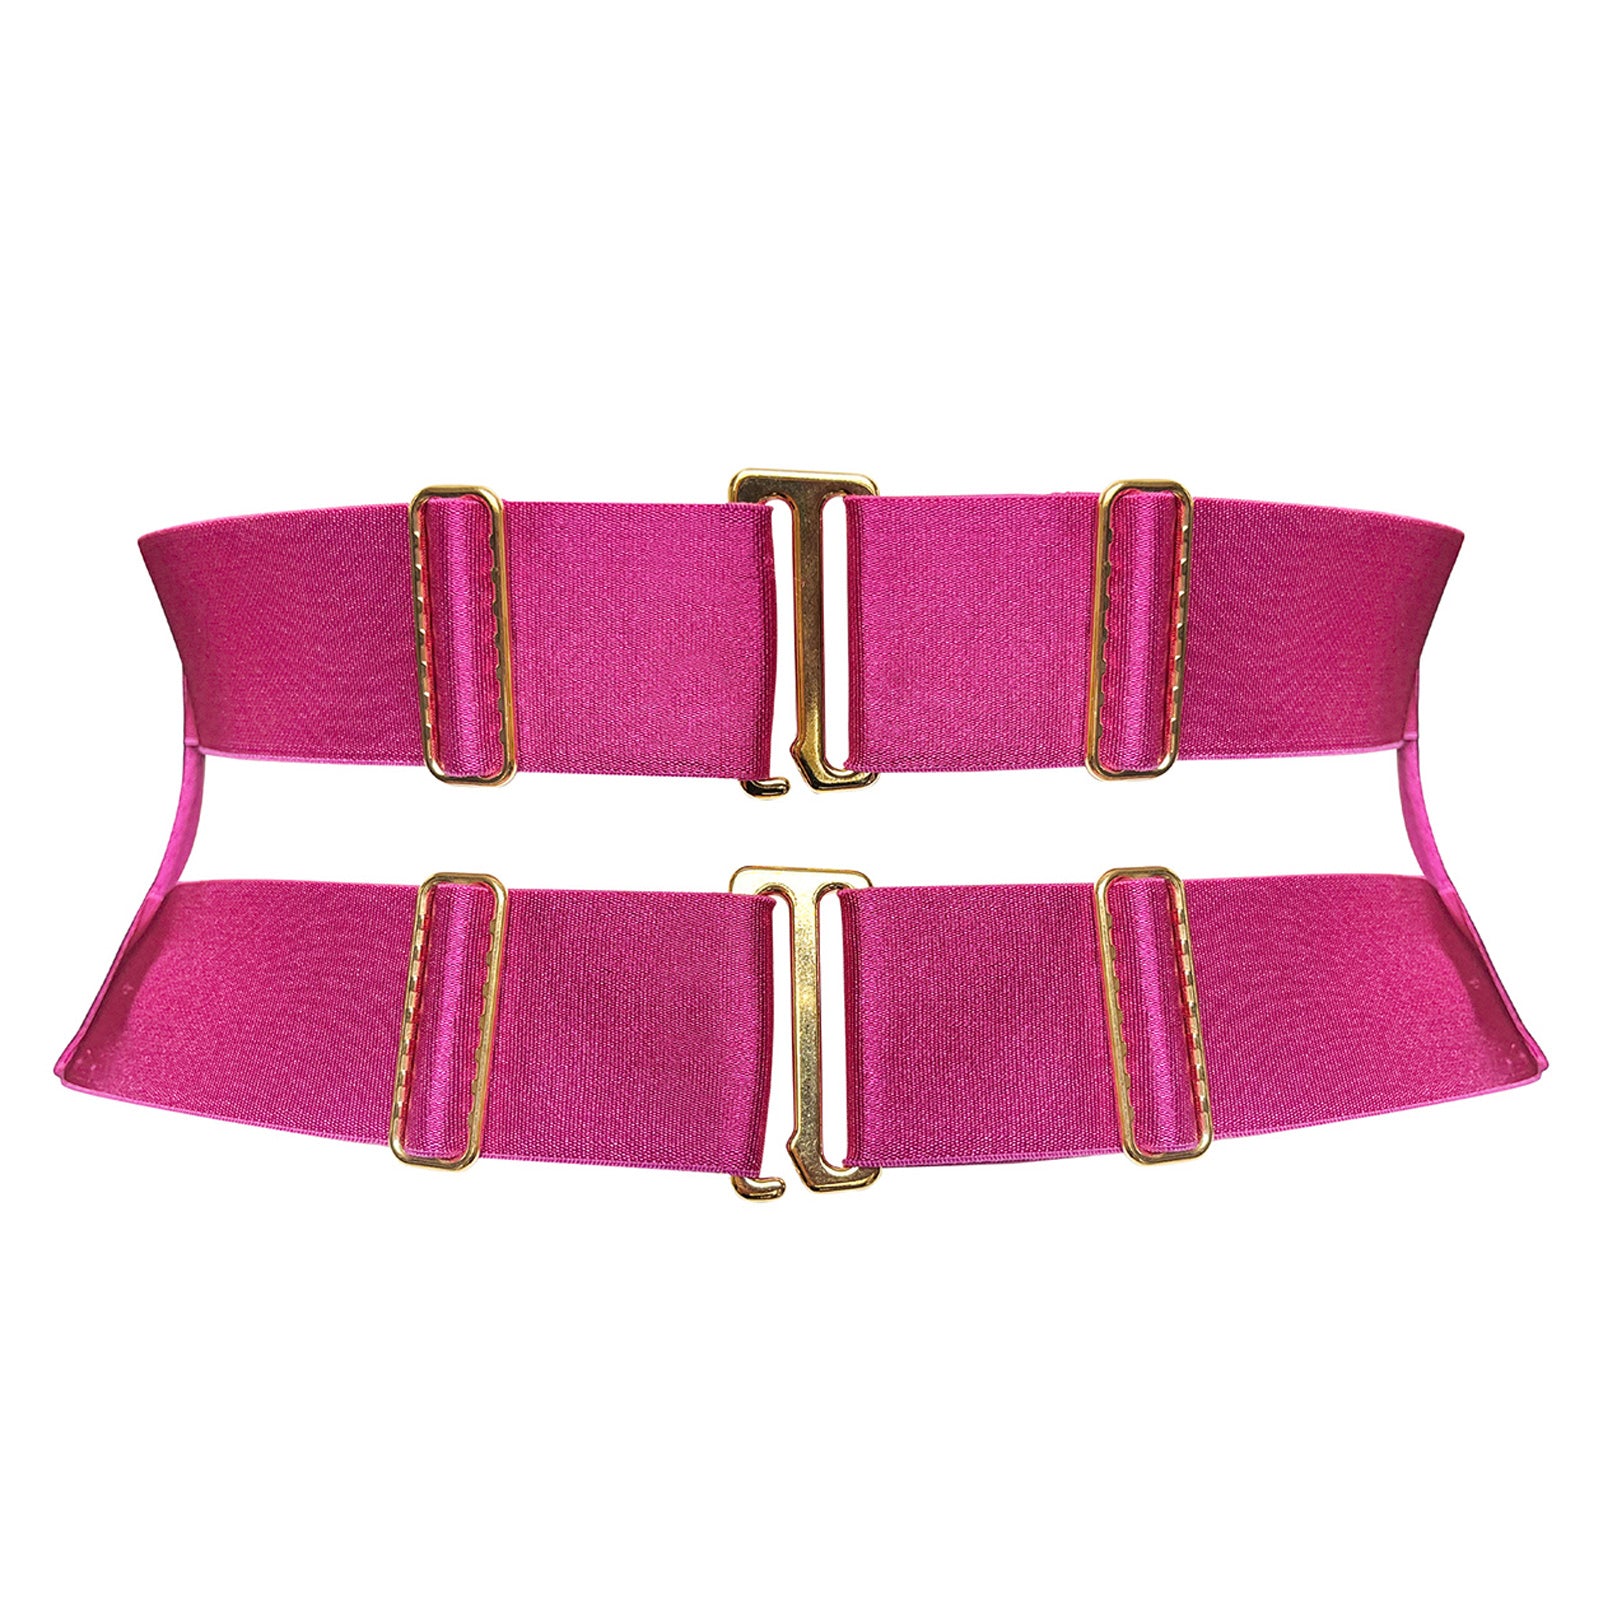 Vero adjustable belt by Bordelle - magenta